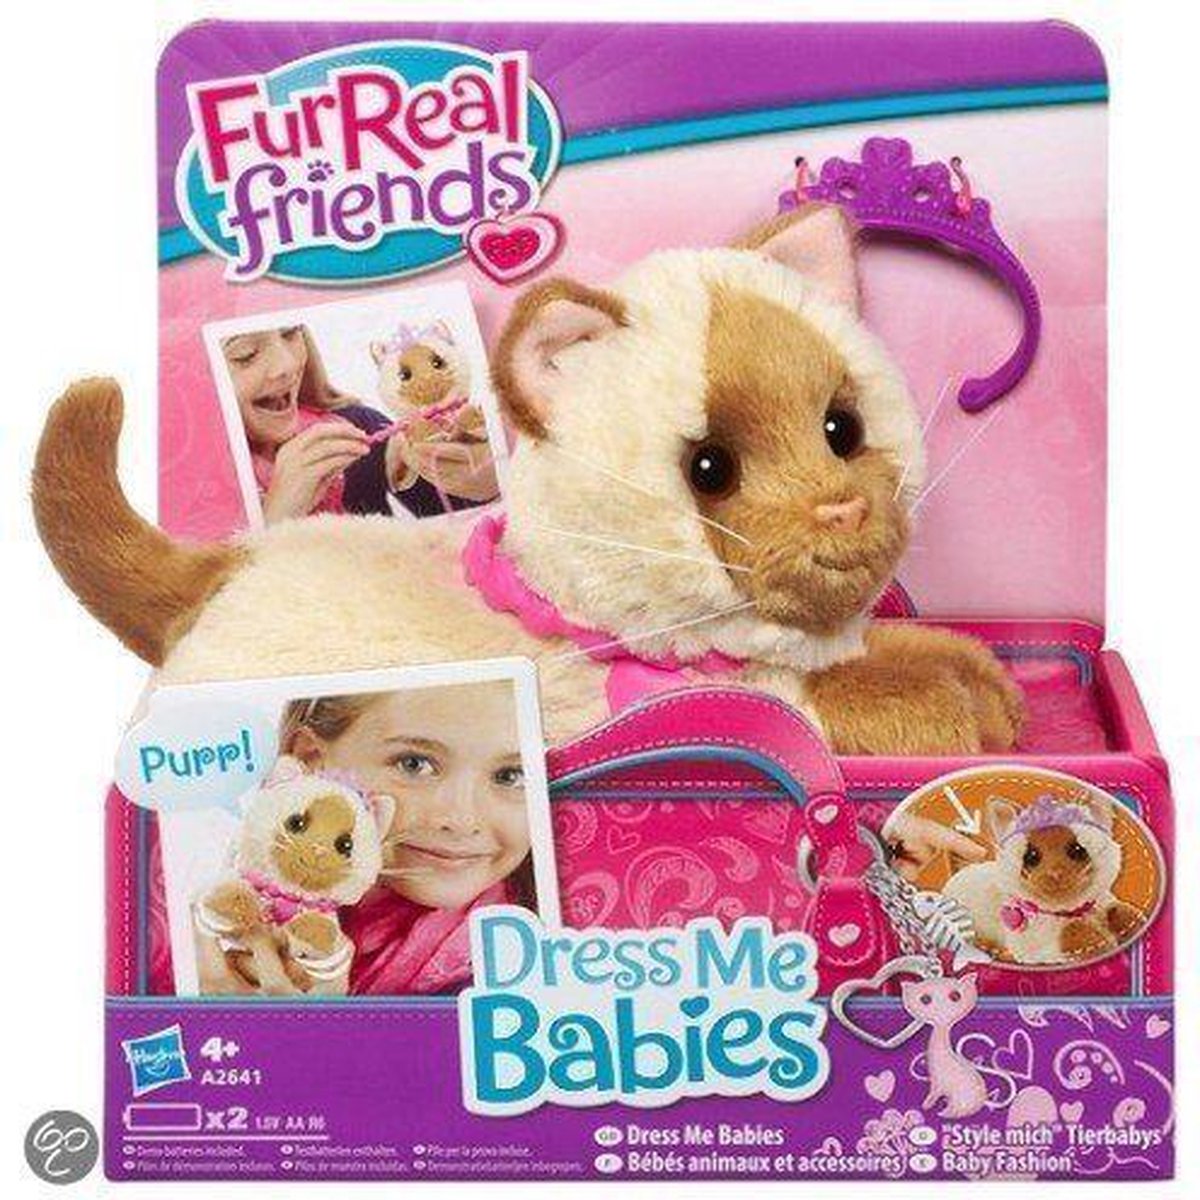 FurReal Friends Dress Me Babies Pat n' Play Pup Pet Plush